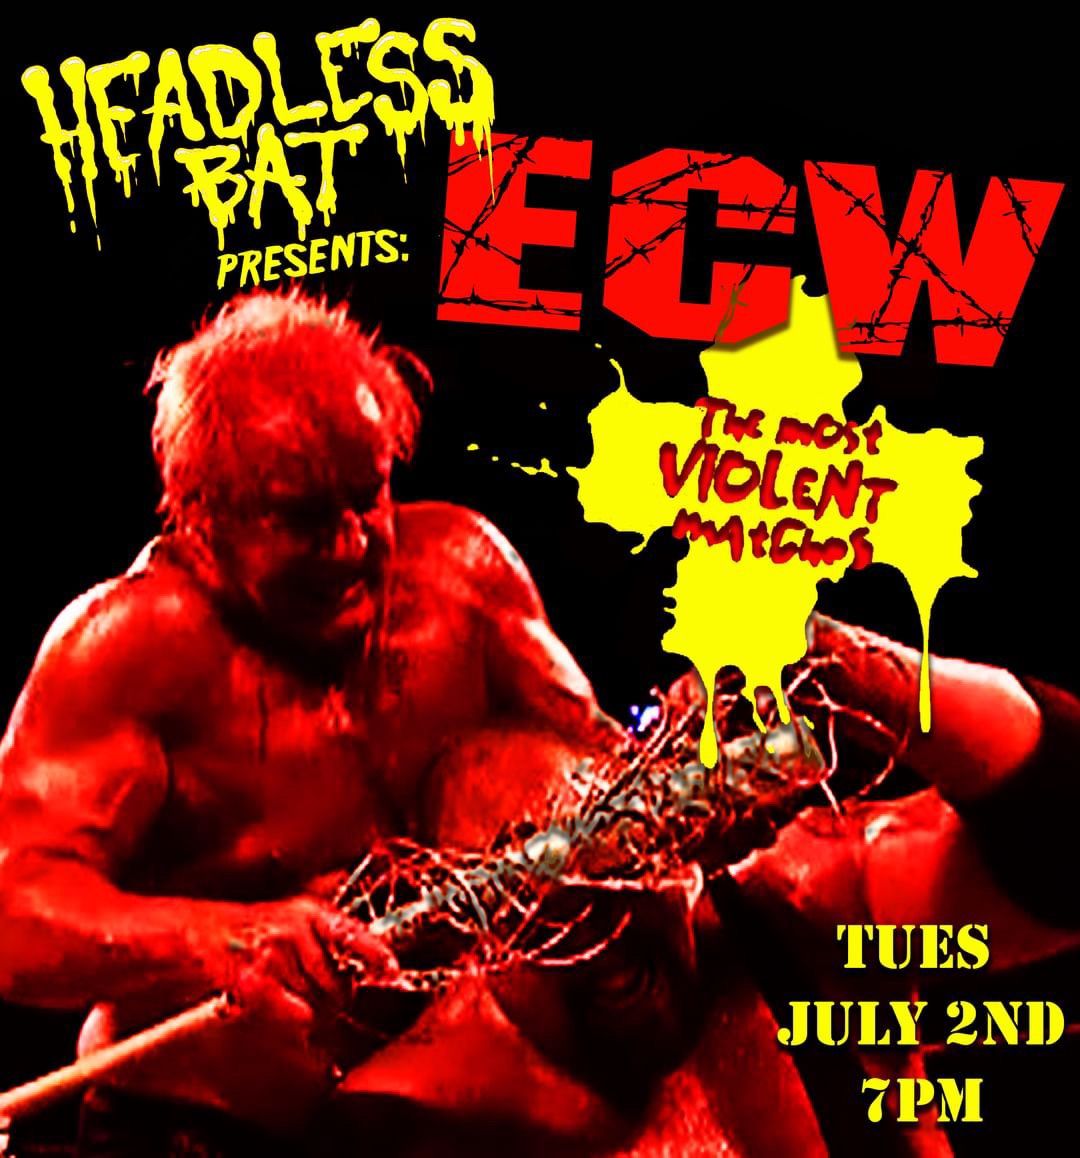 ECW\u2019s Most Violent Matches at the Headless Bat